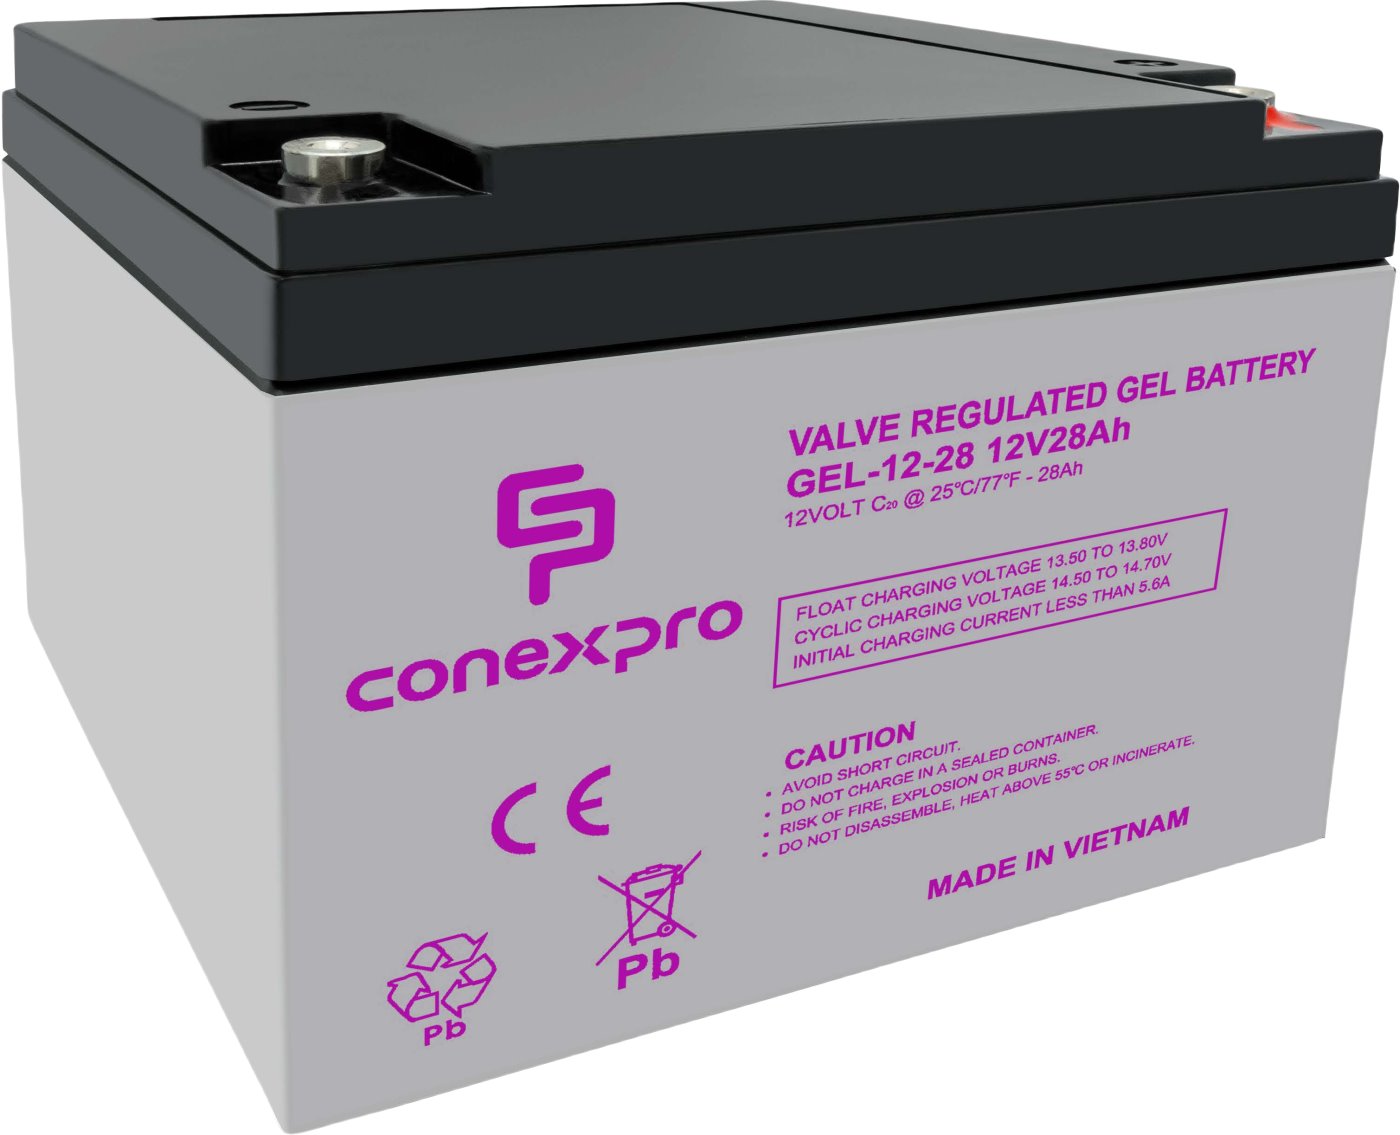 Conexpro baterie gelová, 12V, 28Ah, životnost 10-12 let, M5, Deep cycle